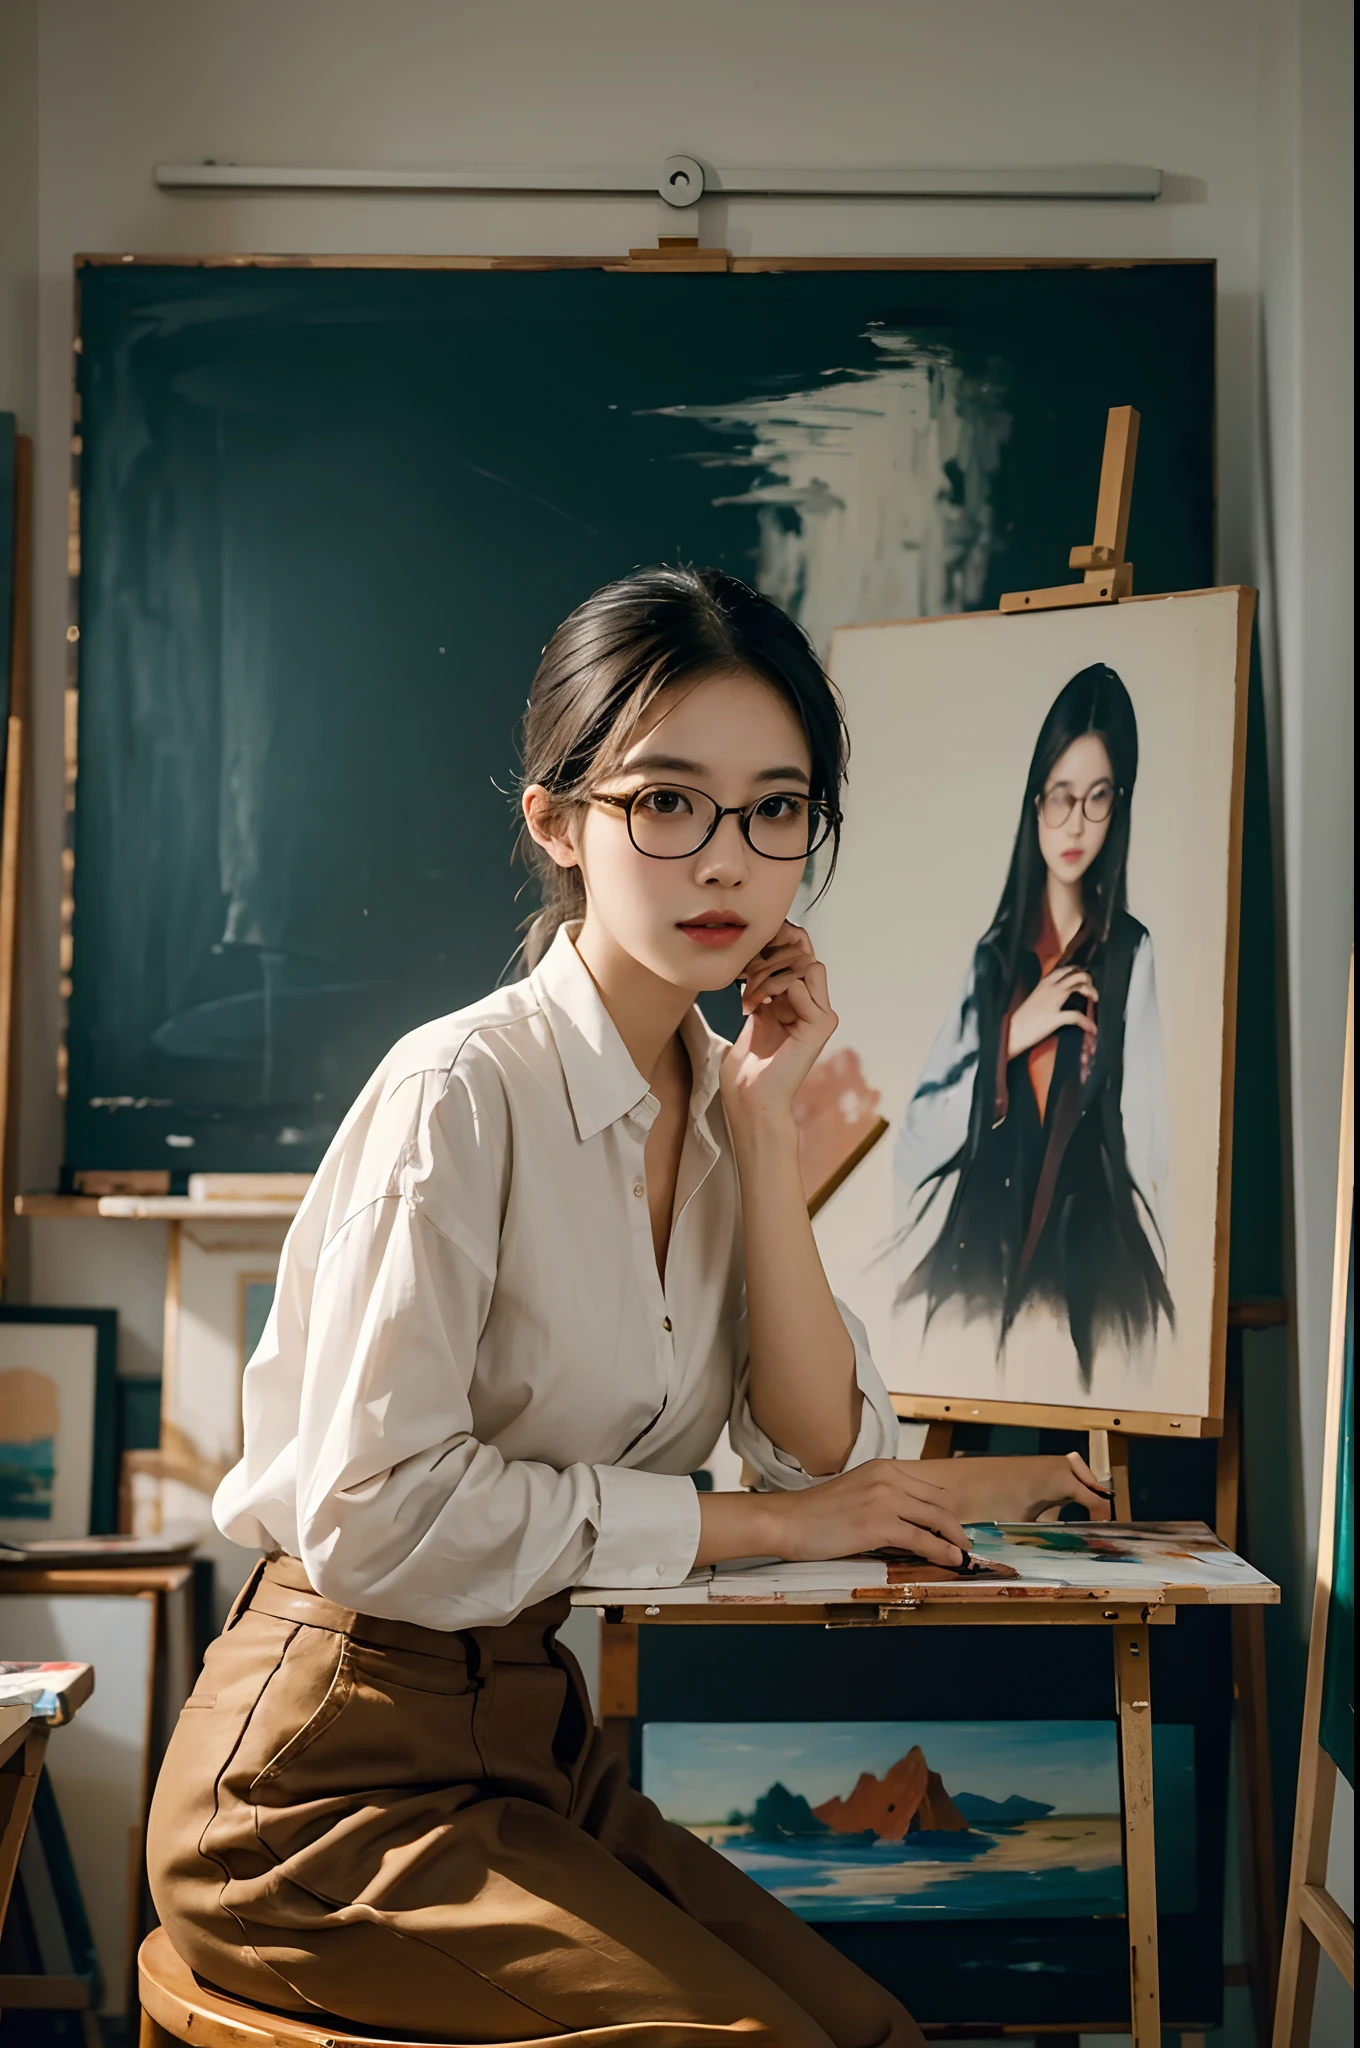 there is a woman sitting on a chair with a จิตรกรรม on the easel, a fine art จิตรกรรม inspired by Lin Liang, อาร์ตสเตชั่น, ศิลปะกระบวนการ, ด้วยแว่นตา, ด้วยแว่นตา on, ในห้องศิลปะของเธอ, สาวเอเชียที่สวยงาม, จิตรกรรม, จิตรกรรม, แว่นตาหนา, สวมแว่นตา, สาวเกาหลี, แต่งตัวเต็มตัว. จิตรกรรม of sexy, รูปลักษณ์เนิร์ด